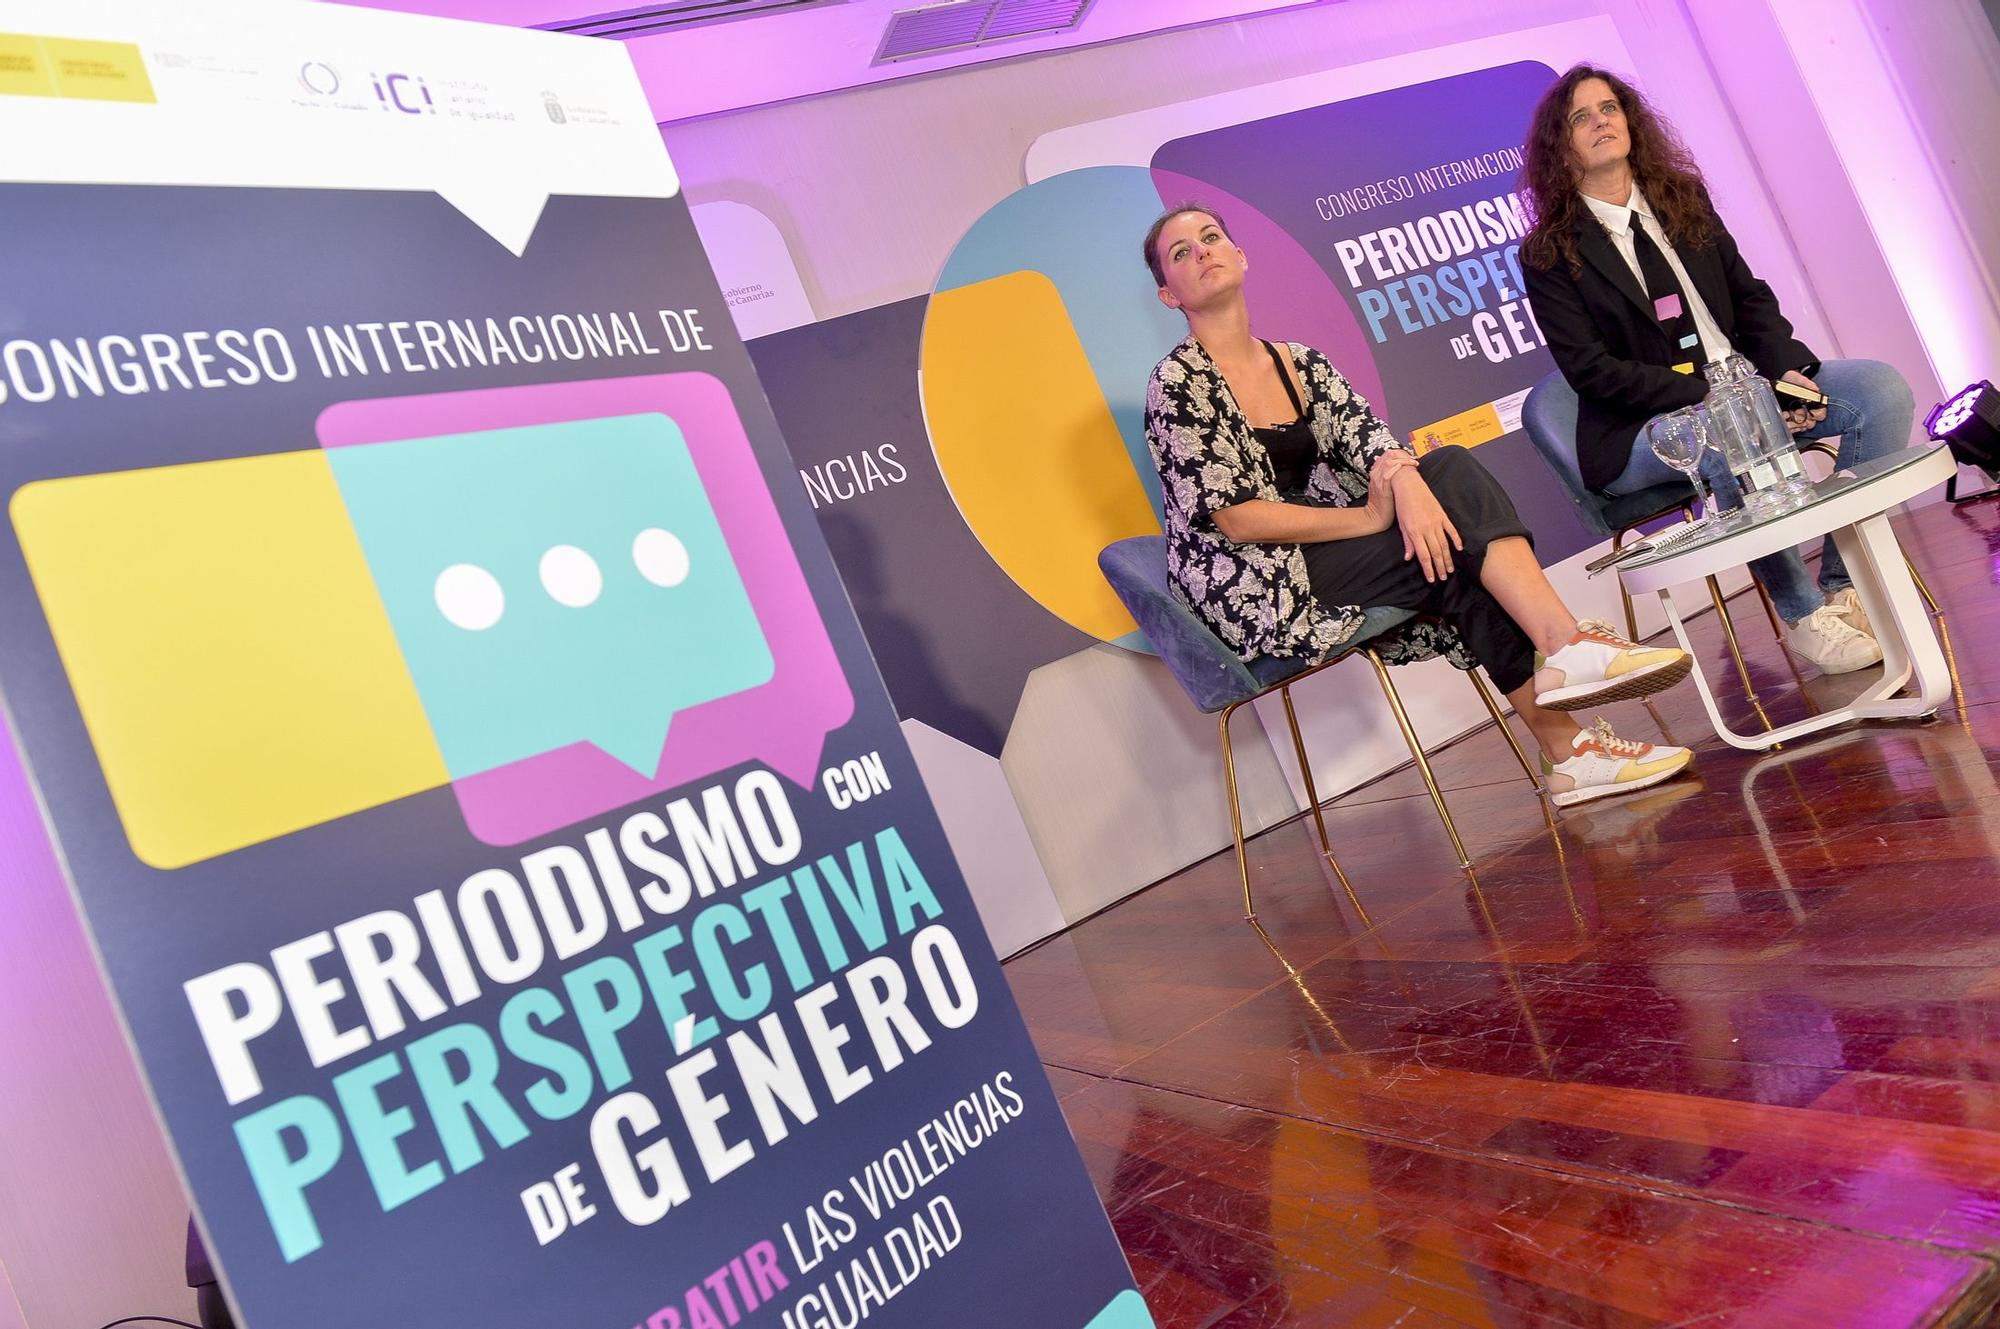 Congreso Internacional de Periodismo con perspectiva de género